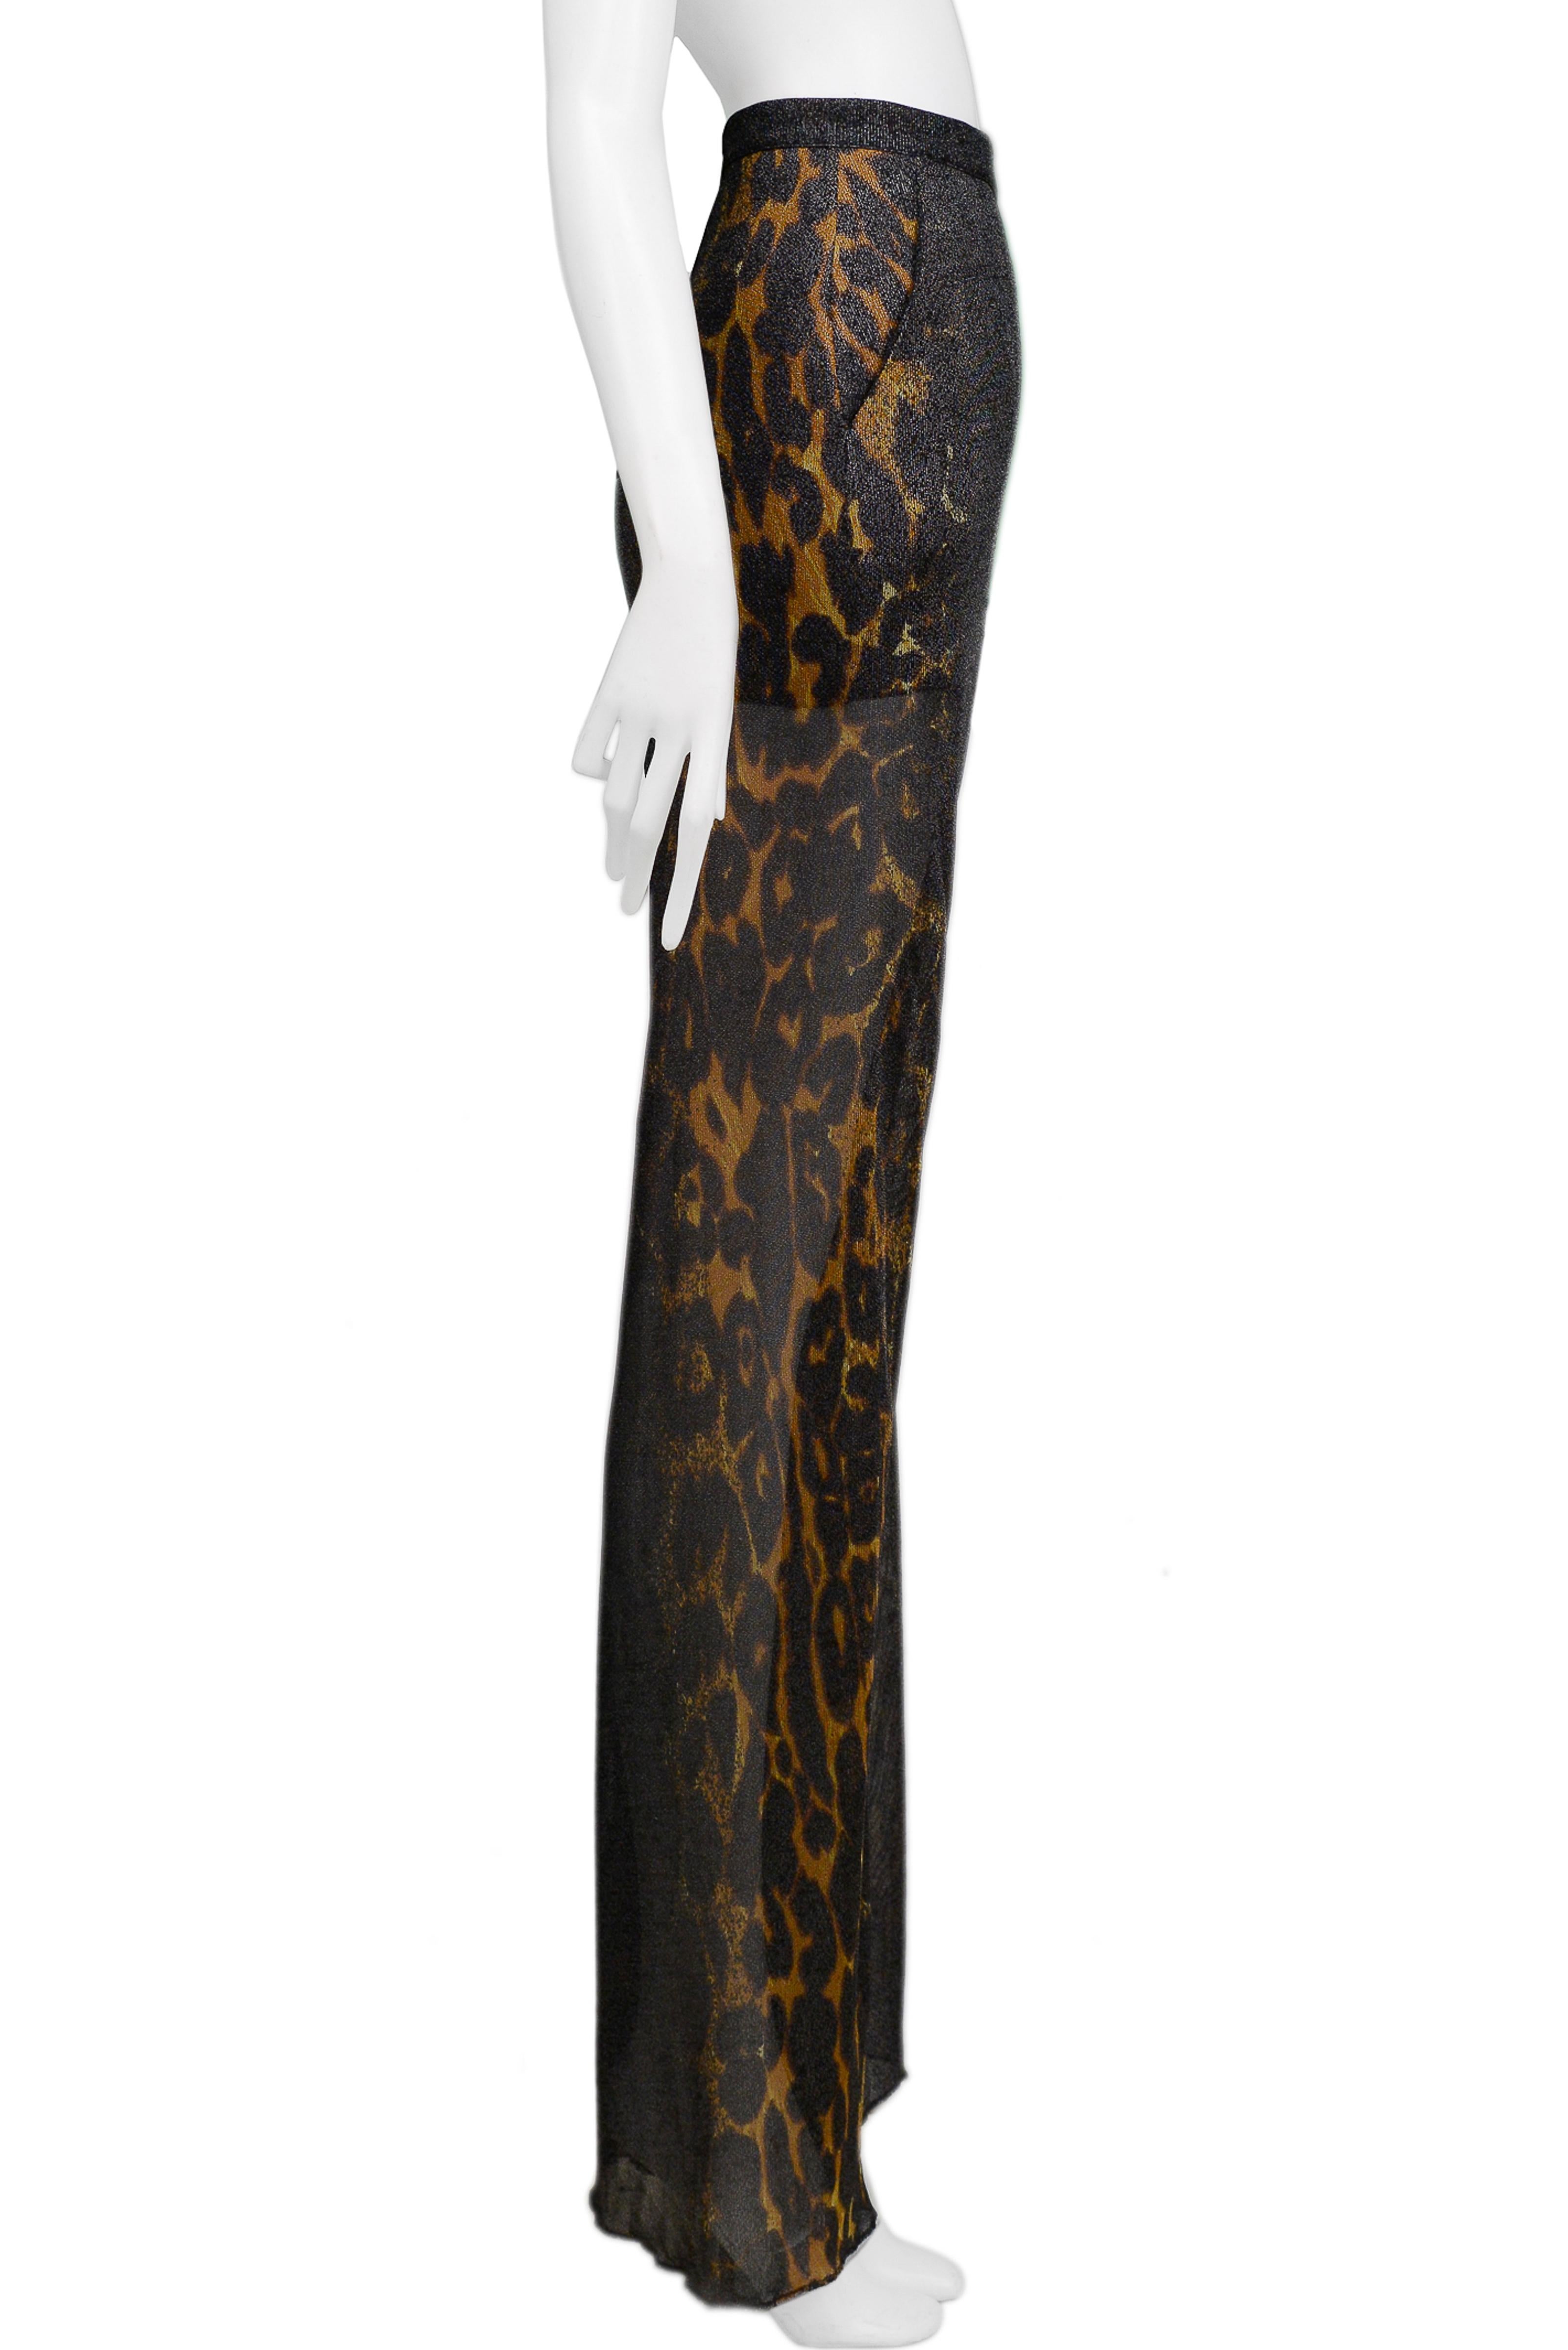 Gianfranco Ferre Black & Leopard Print Sheer Lurex Disco Pants 1